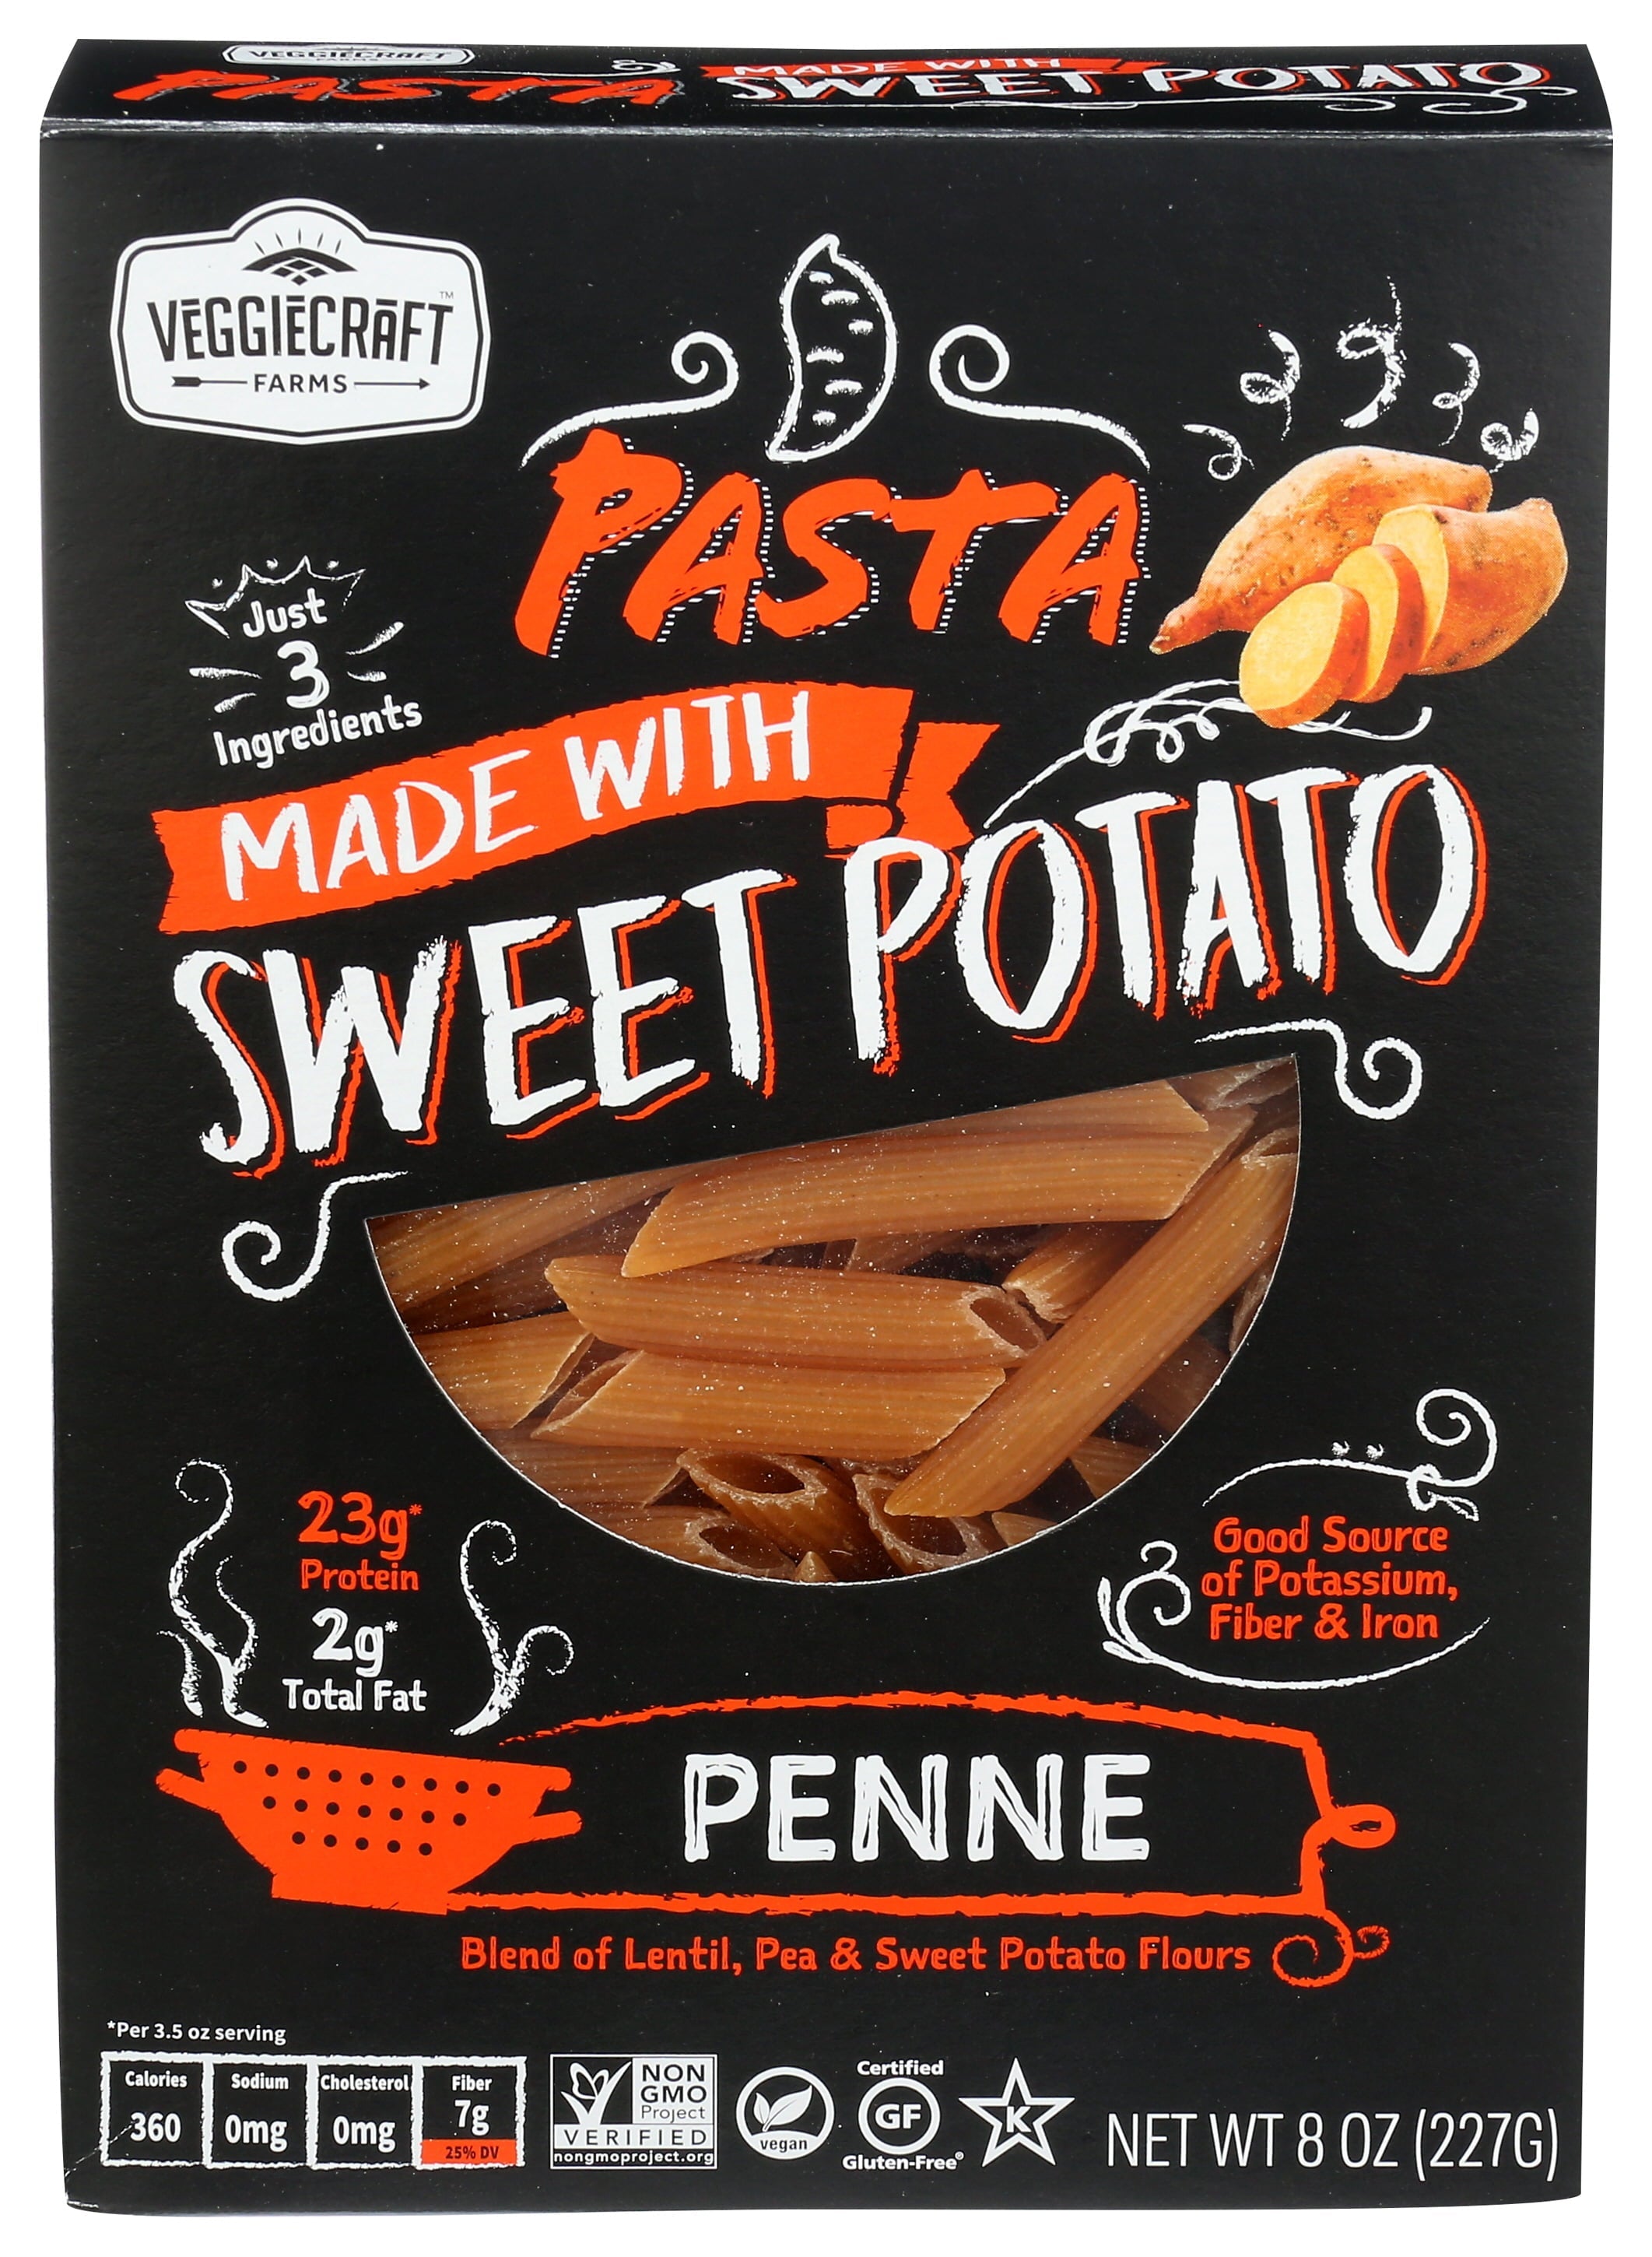 Veggiecraft Sweet Potato Penne 8 oz Bag